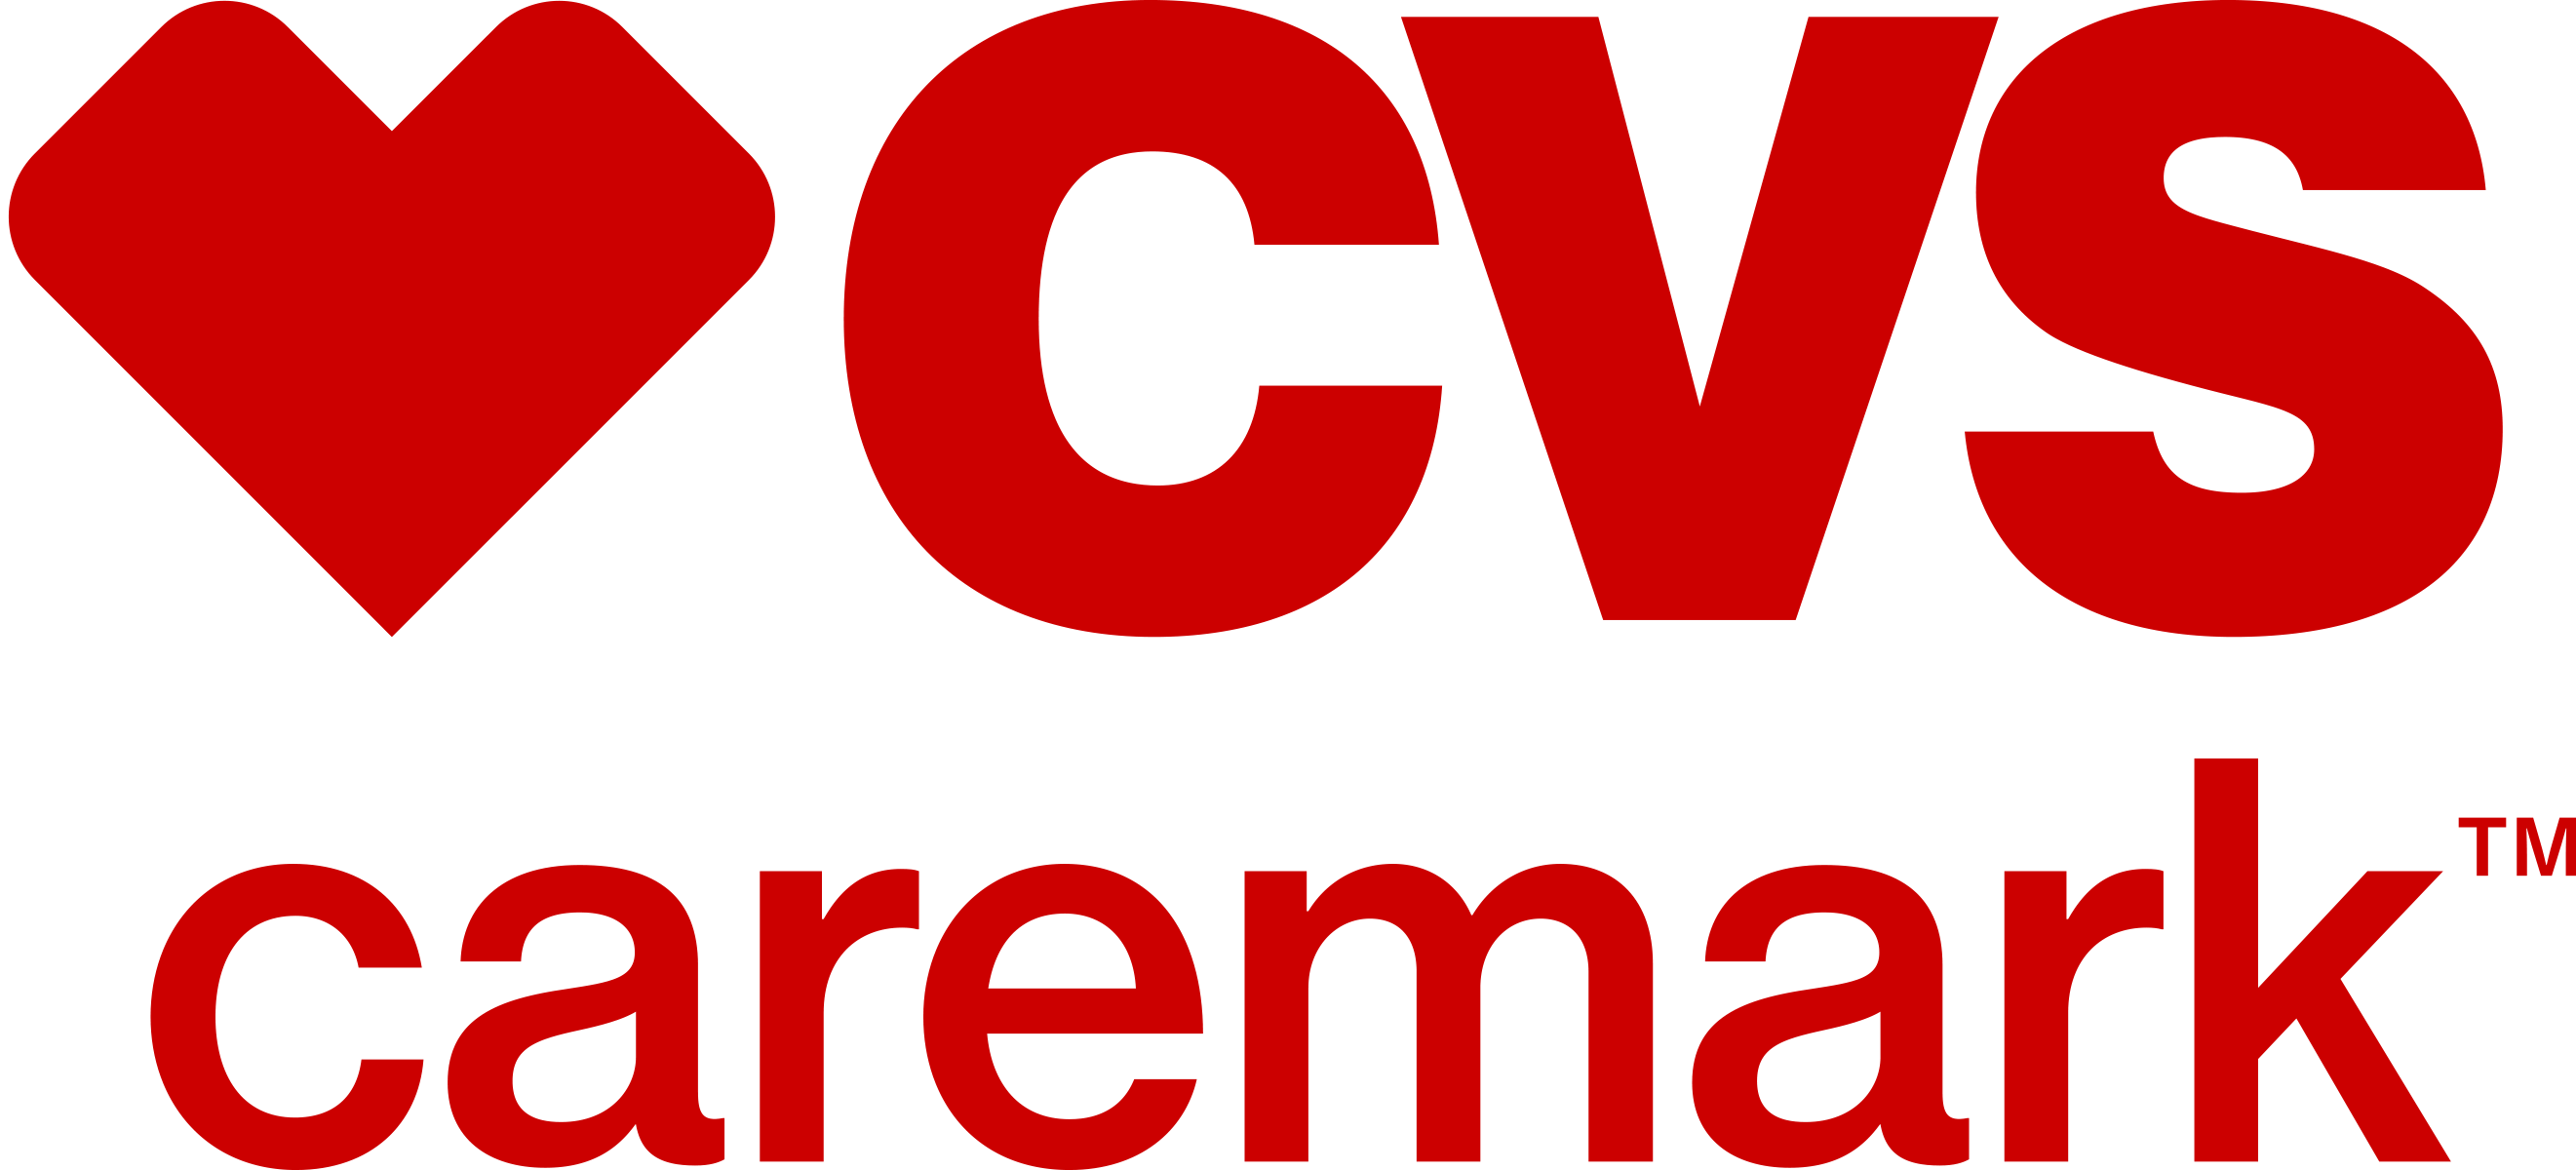 CVS Caremark Announces Formulary for 2022